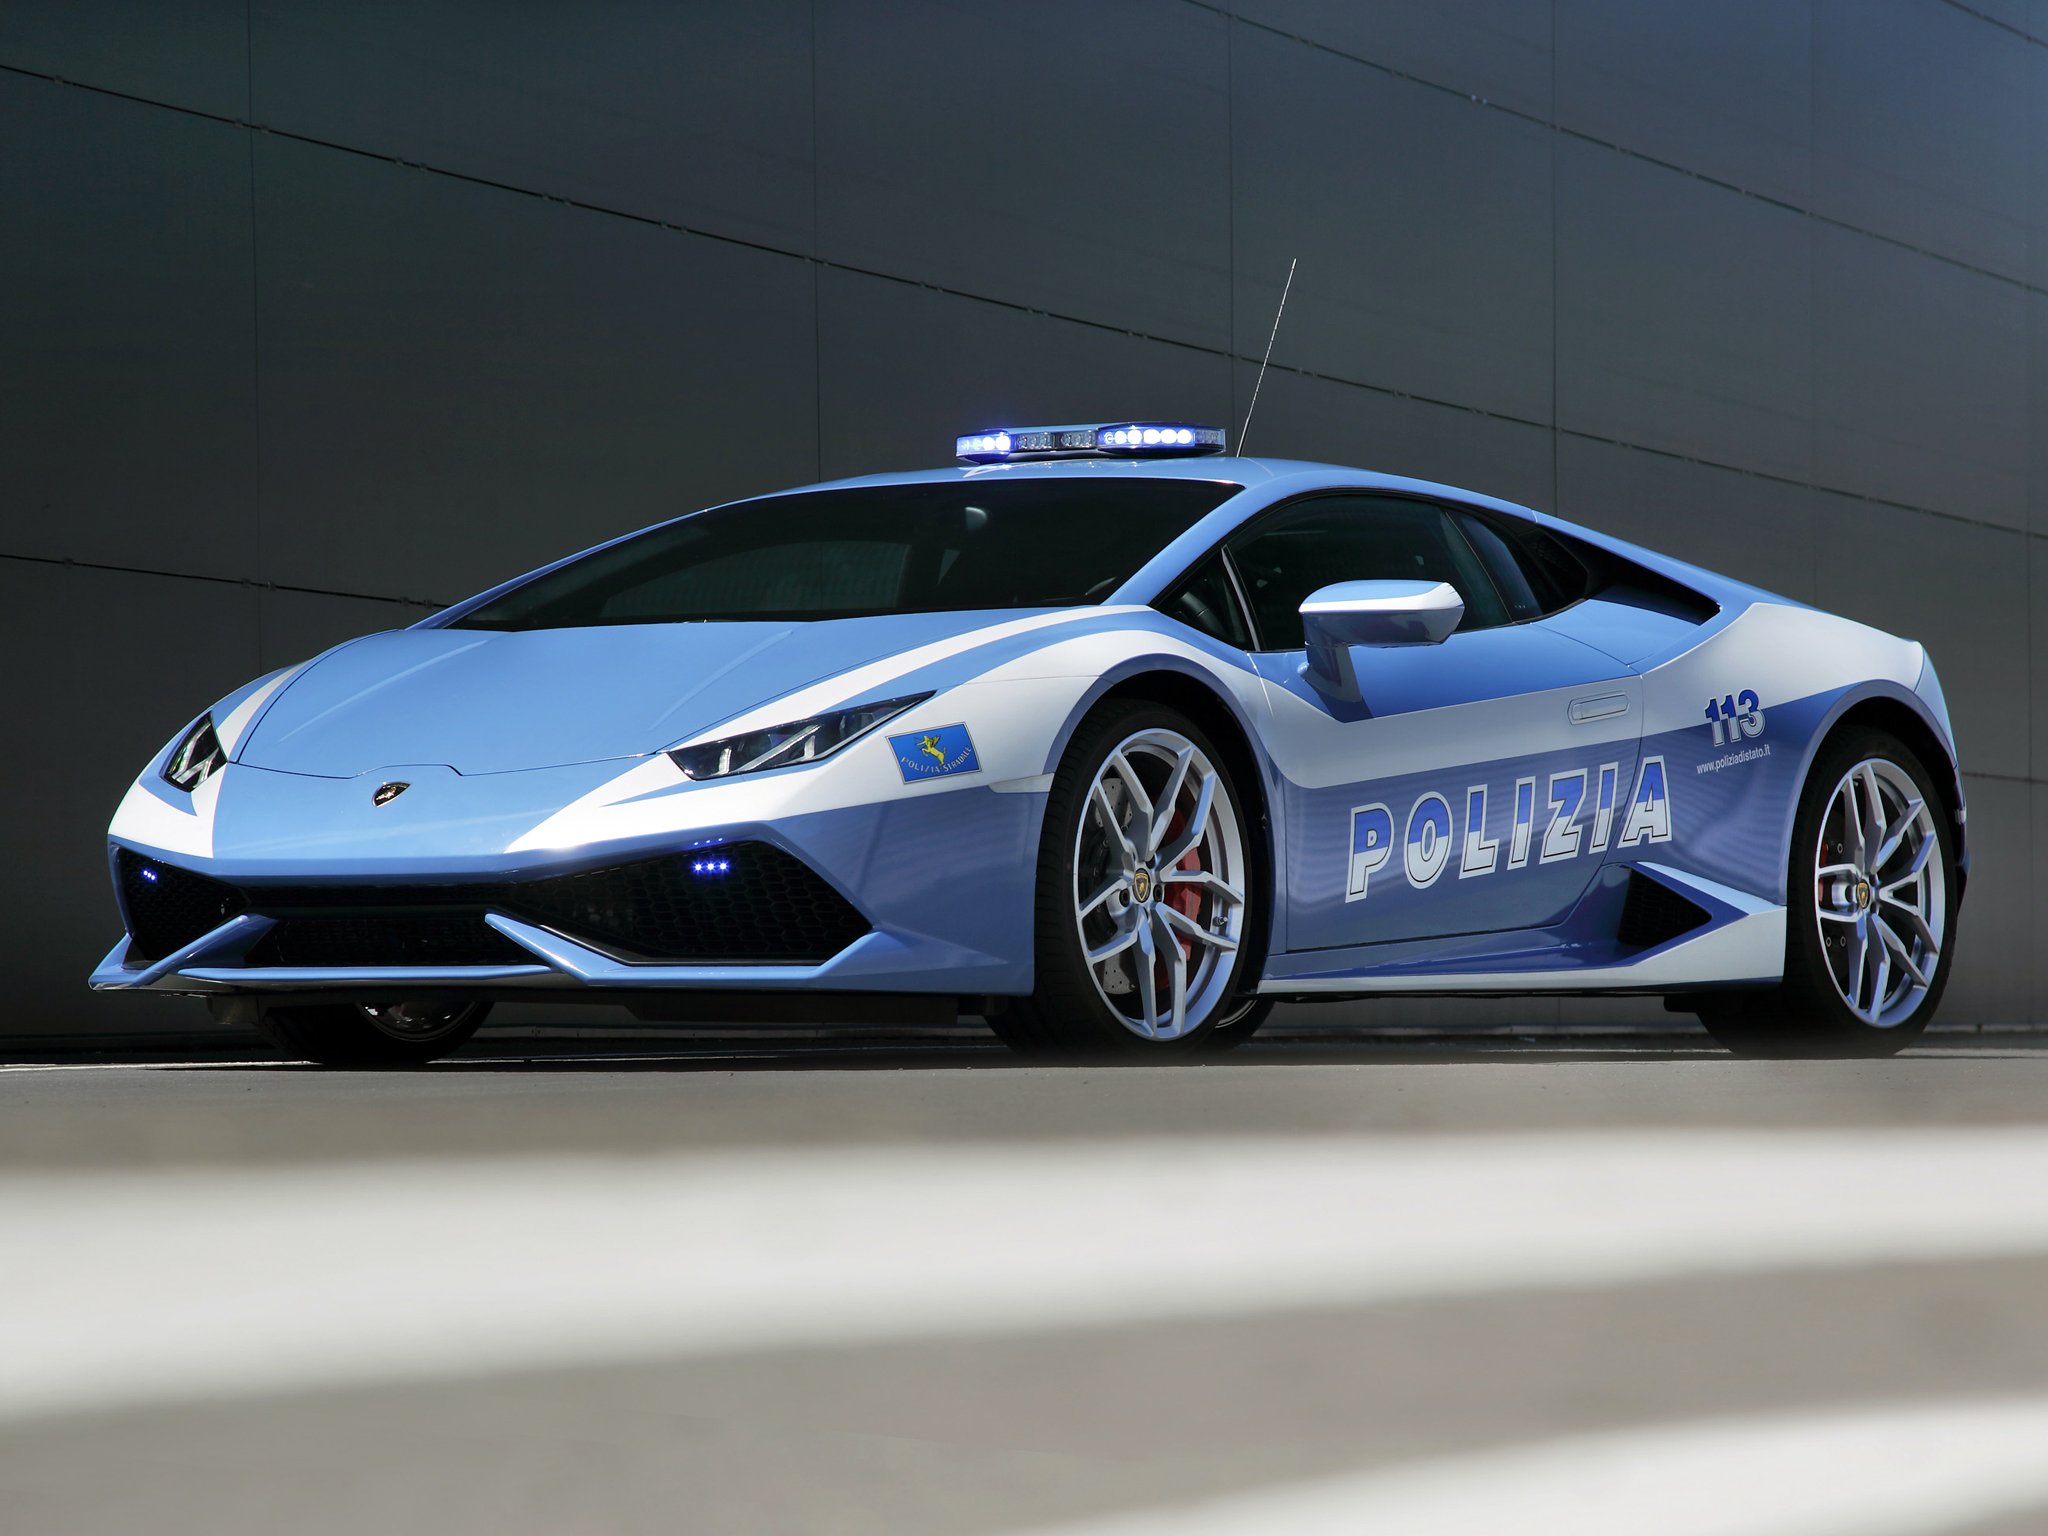 2014, Lamborghini, Huracan, Lp610 4, Polizia,  lb724 , Police, Emergency, Supercar Wallpaper